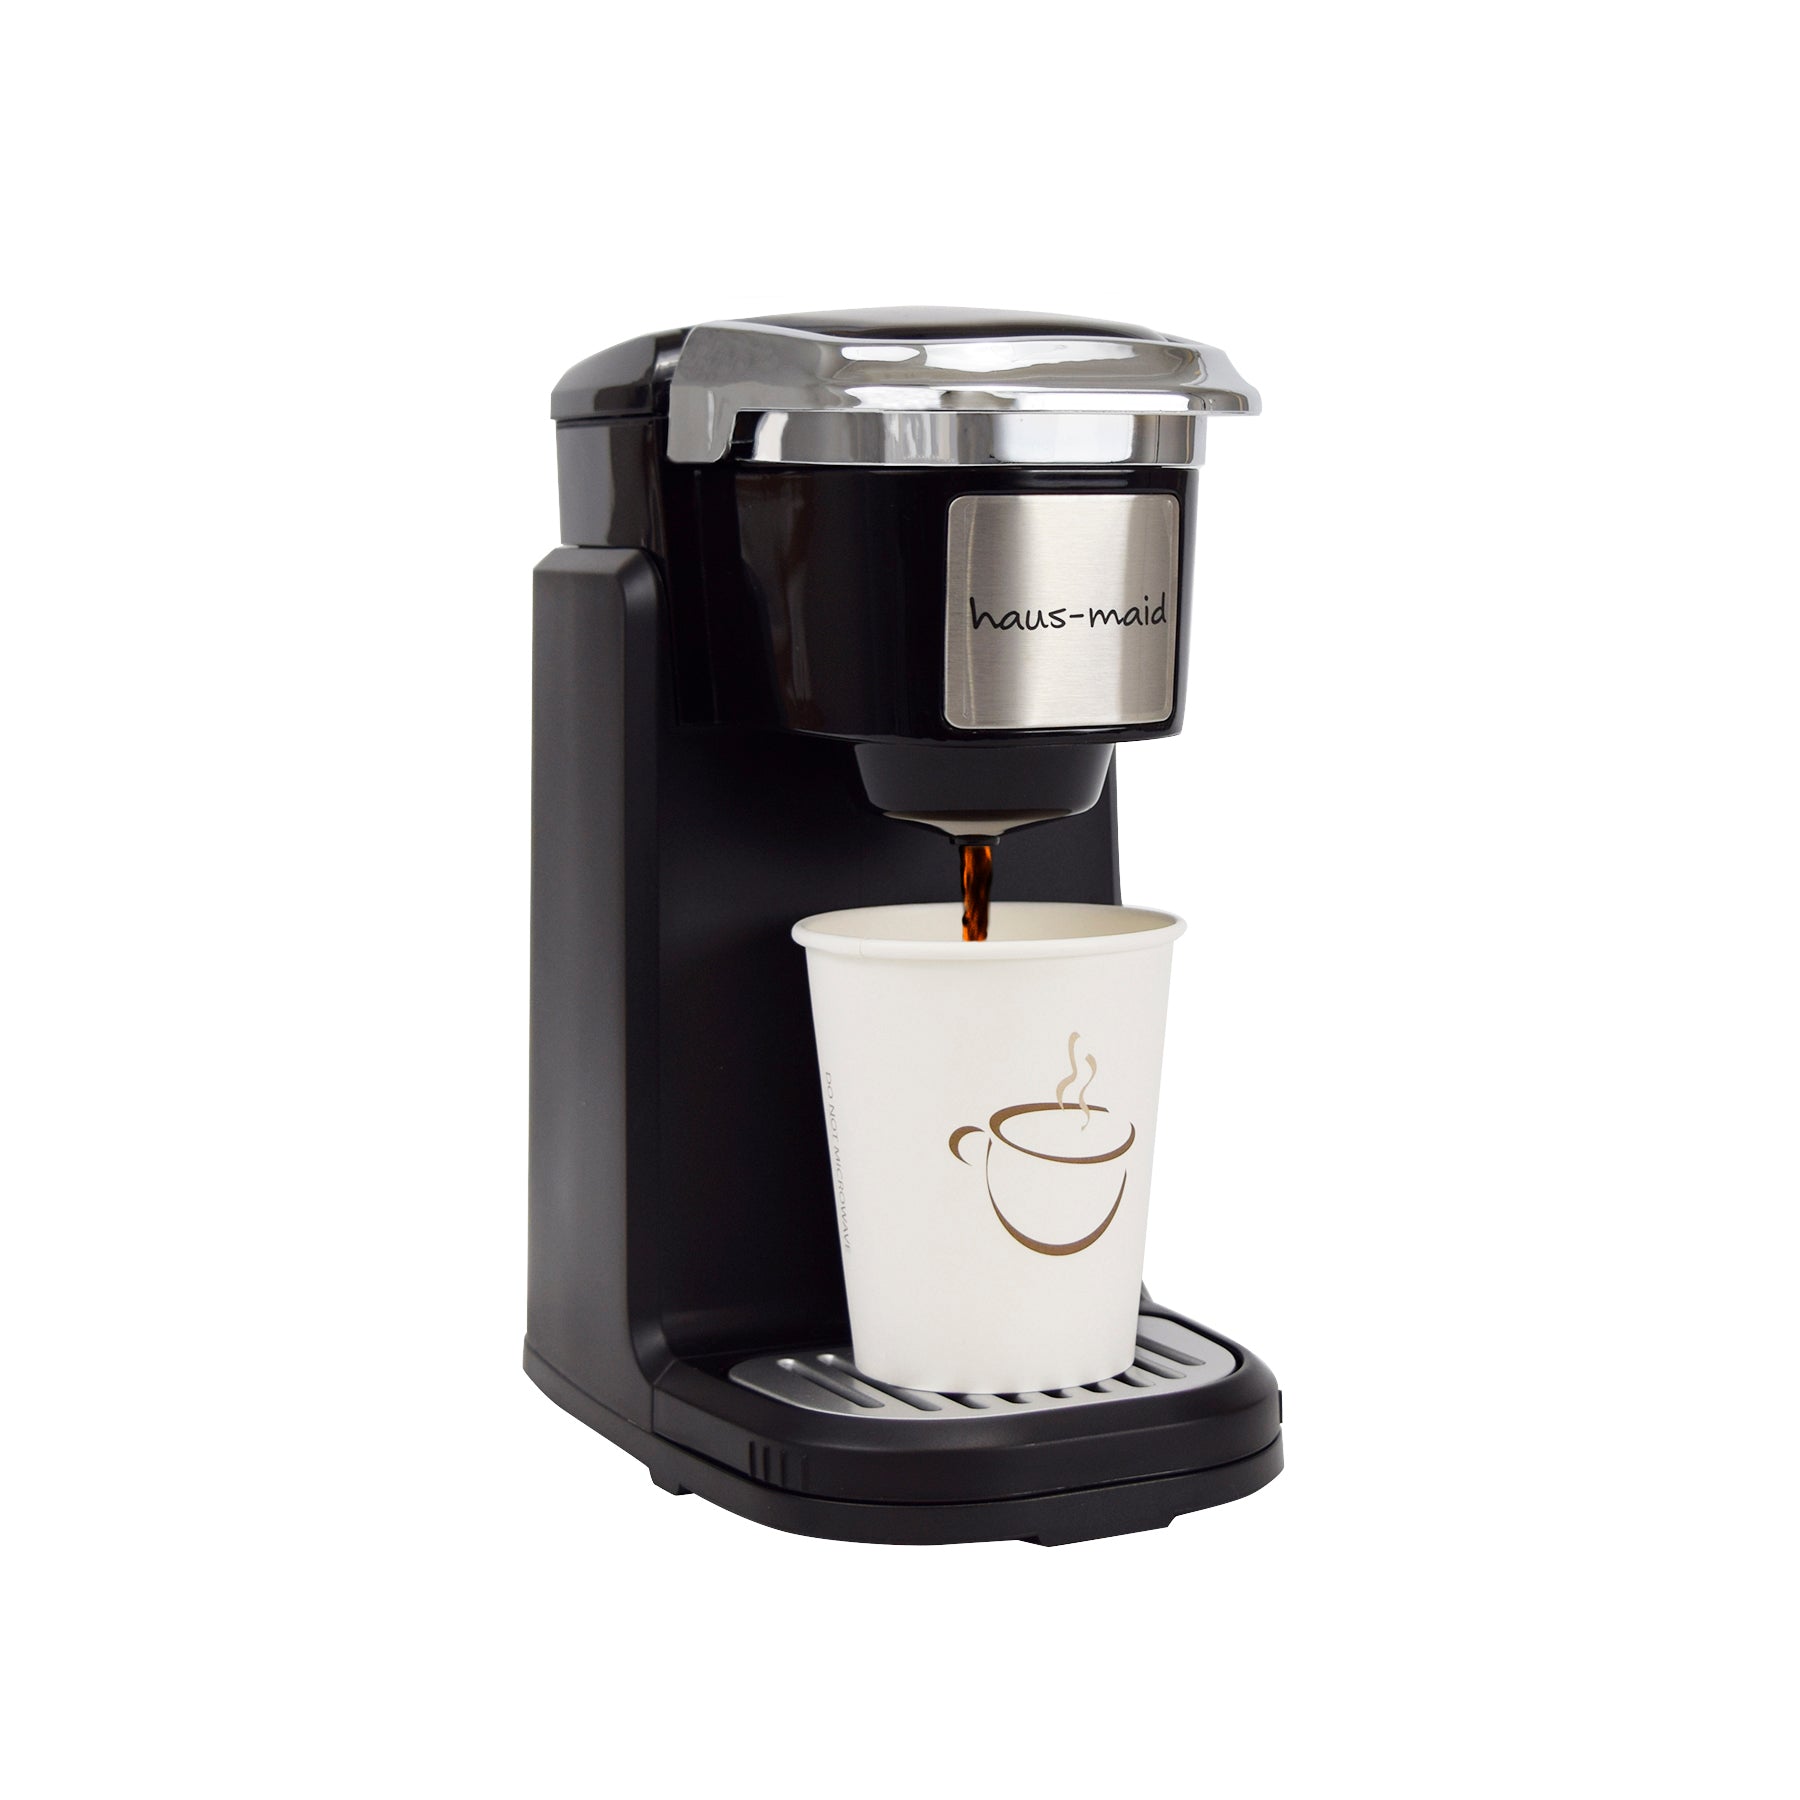 Hamilton Beach - FlexBrew Single-Serve Coffee Maker - Black